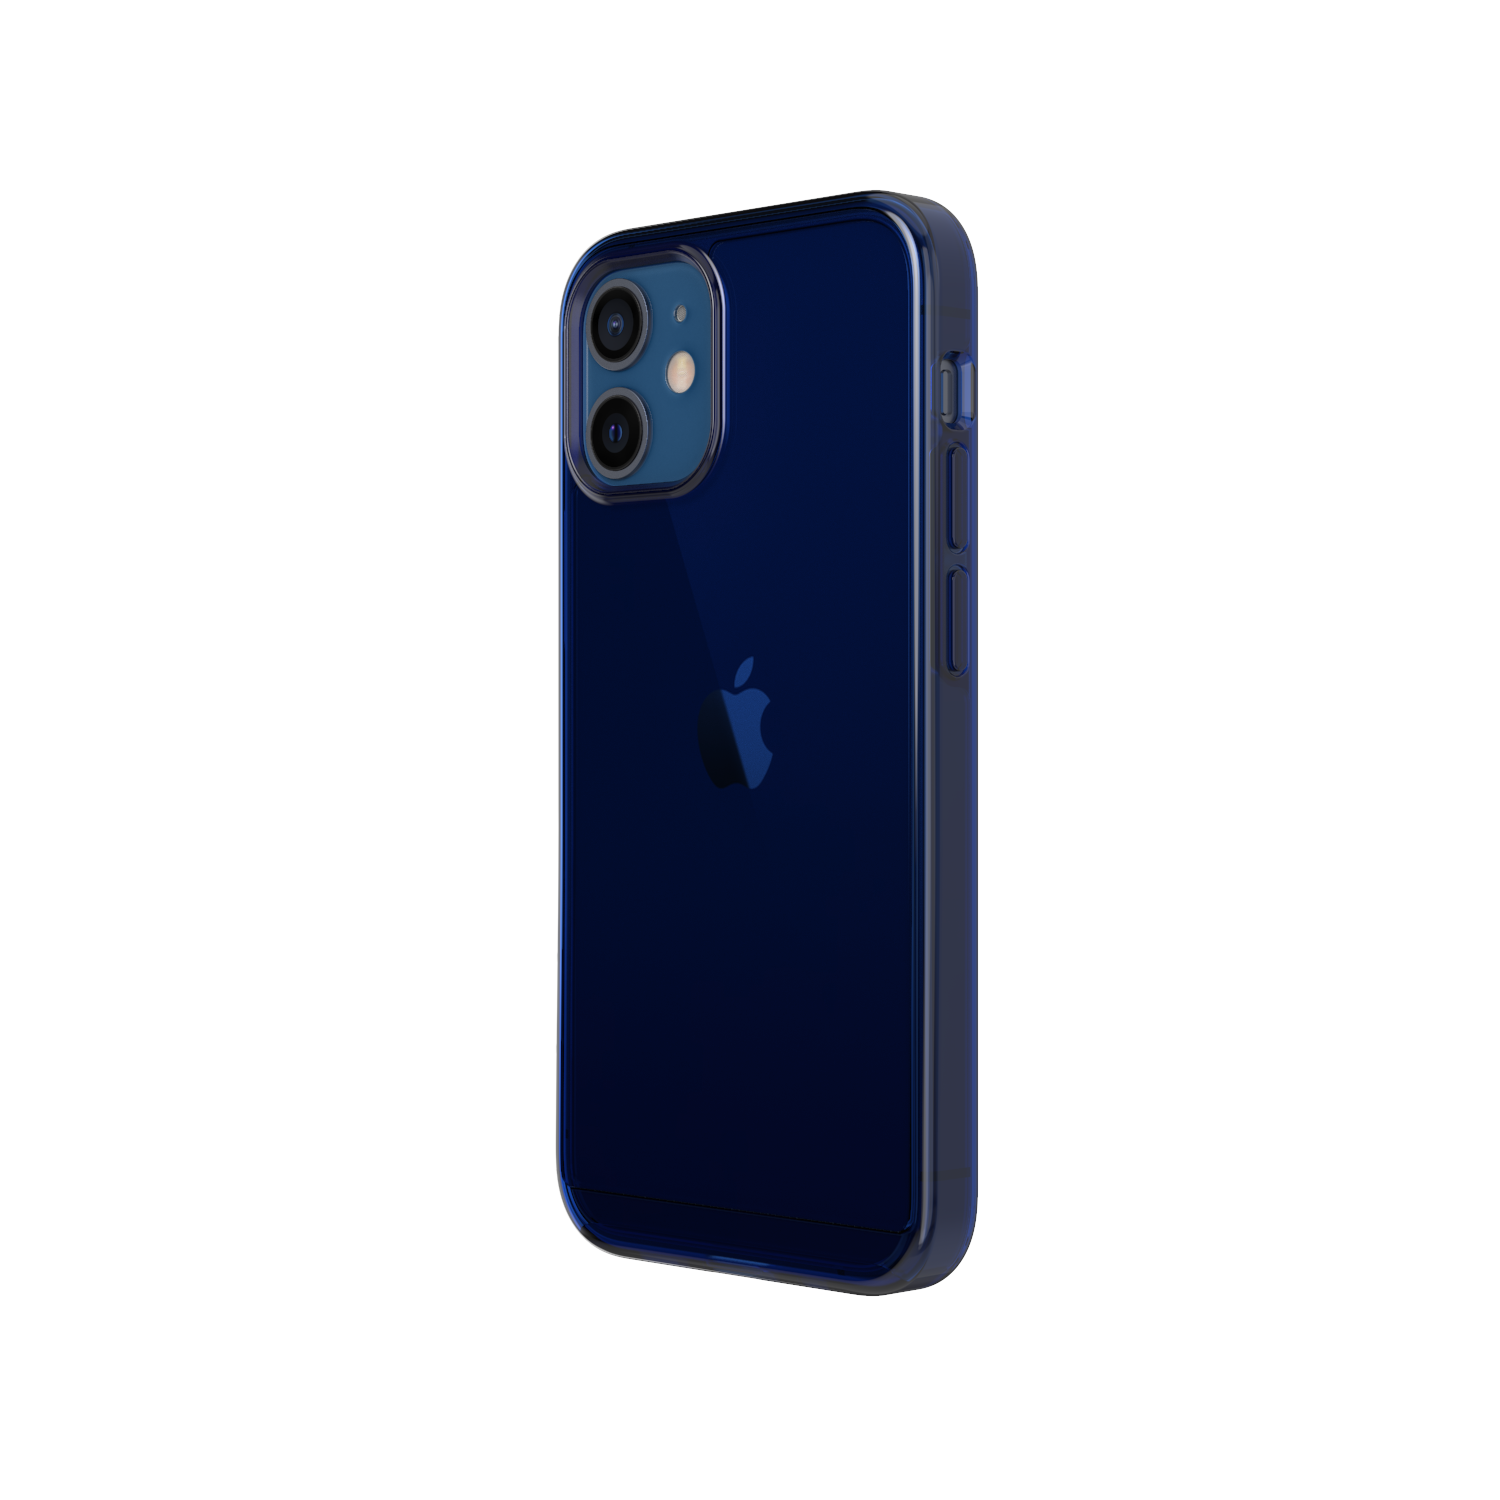 Aspect 'Ocean Blue' for iPhone 12 Mini